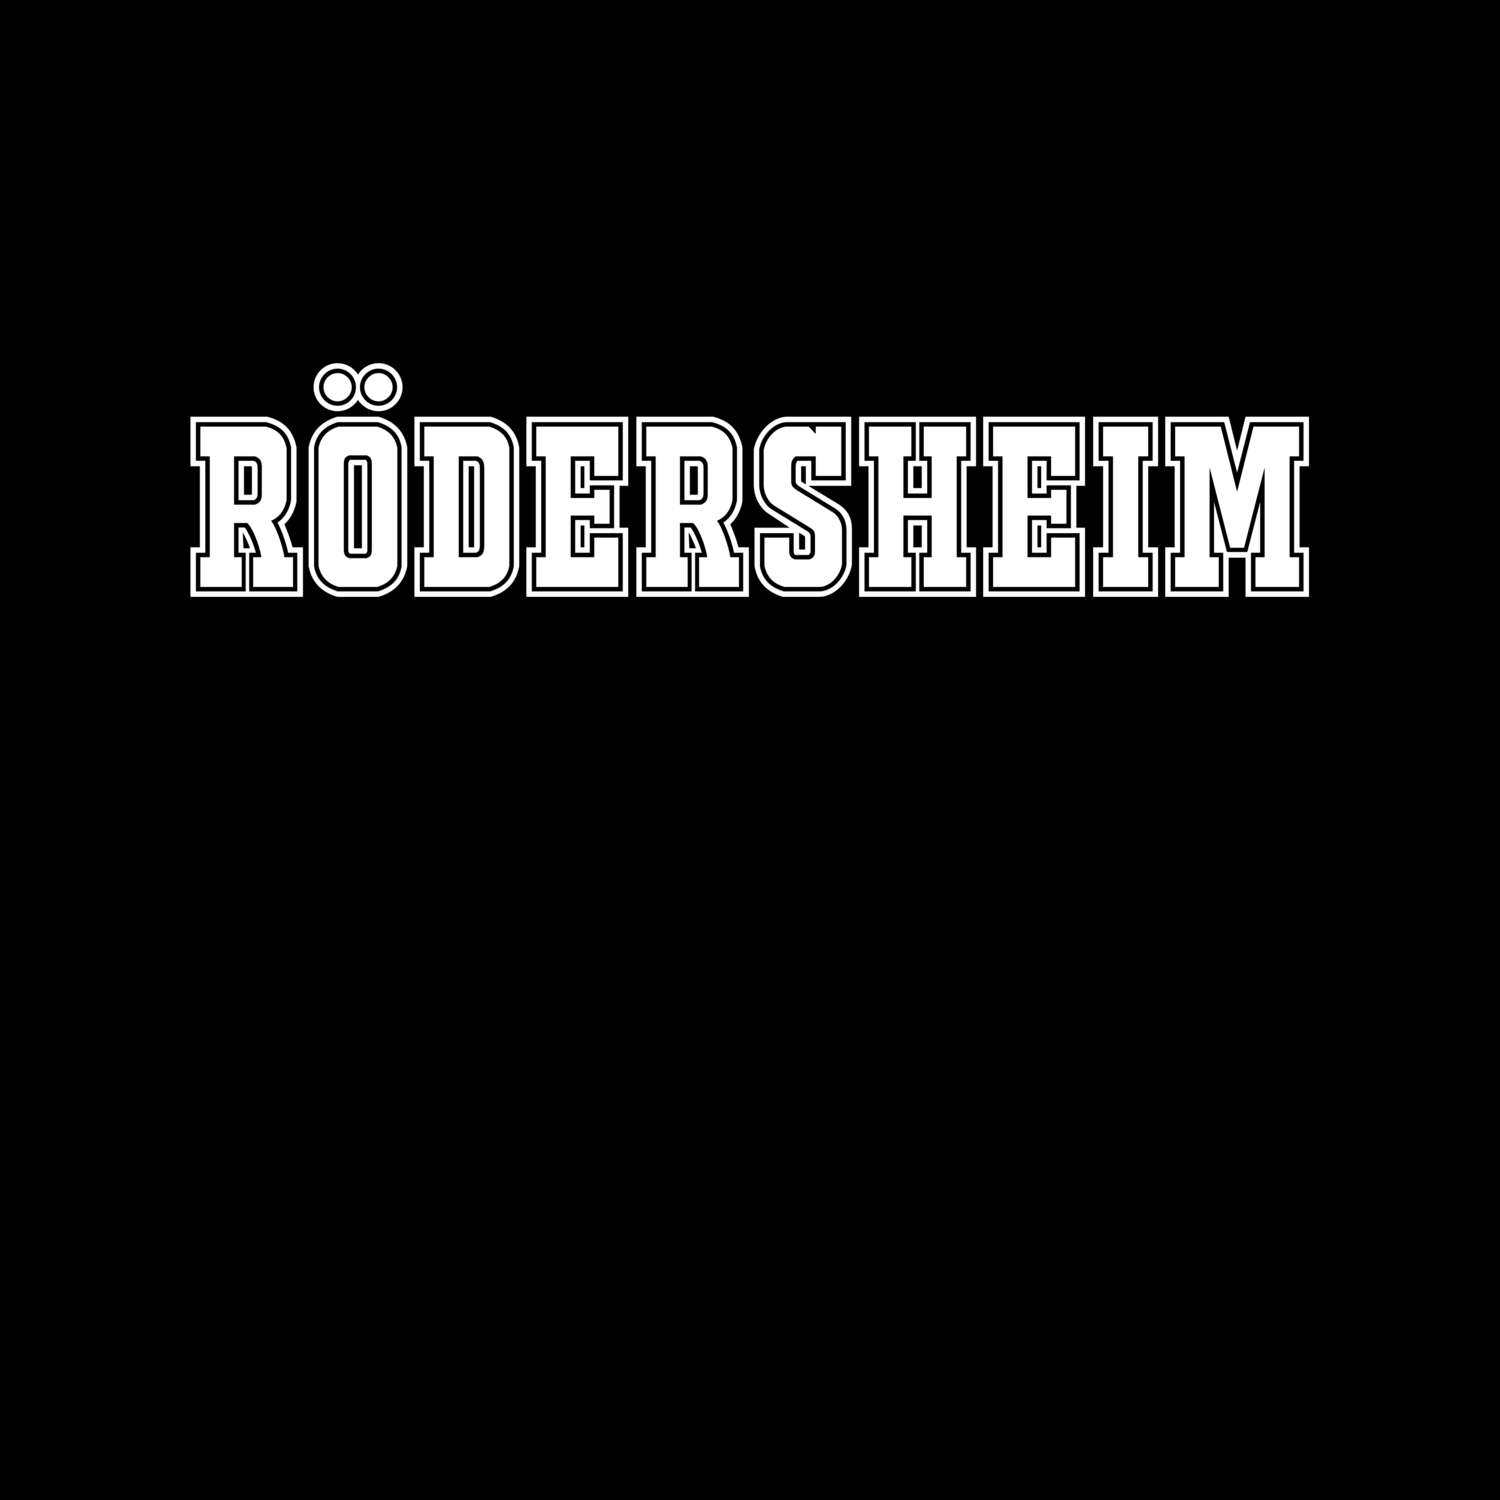 Rödersheim T-Shirt »Classic«